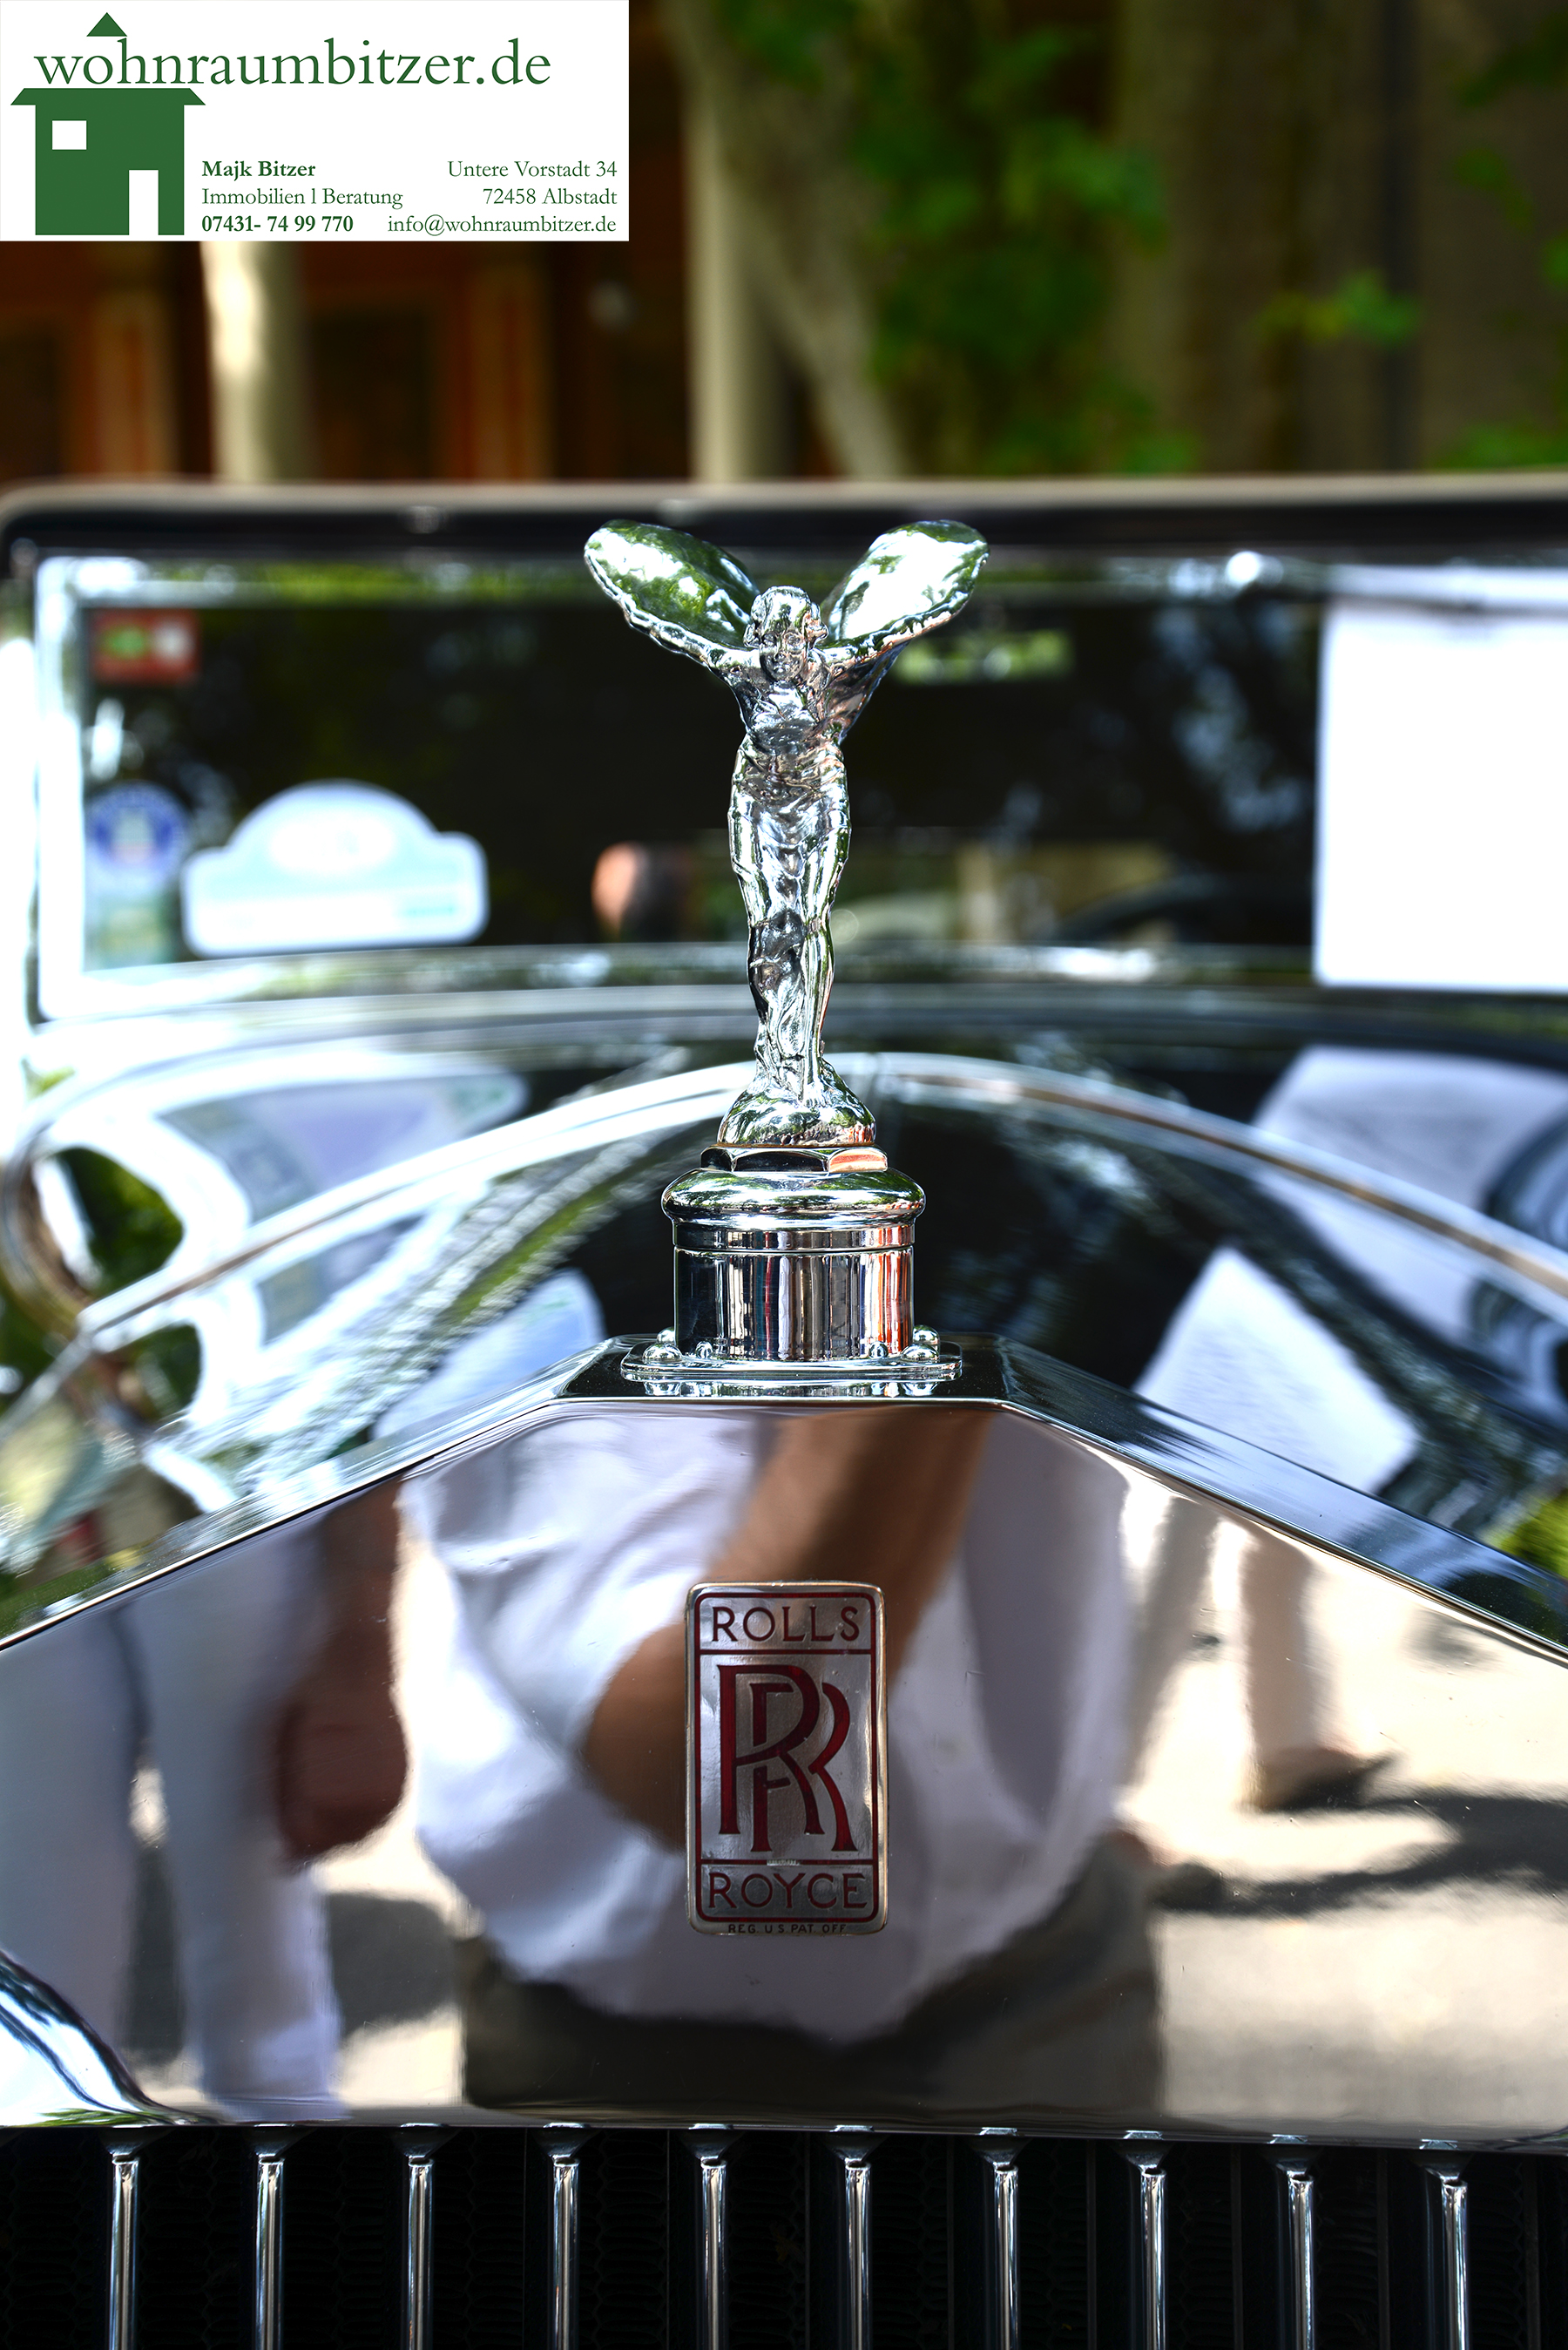 Rolls-Royce Emiliy Baden-Baden